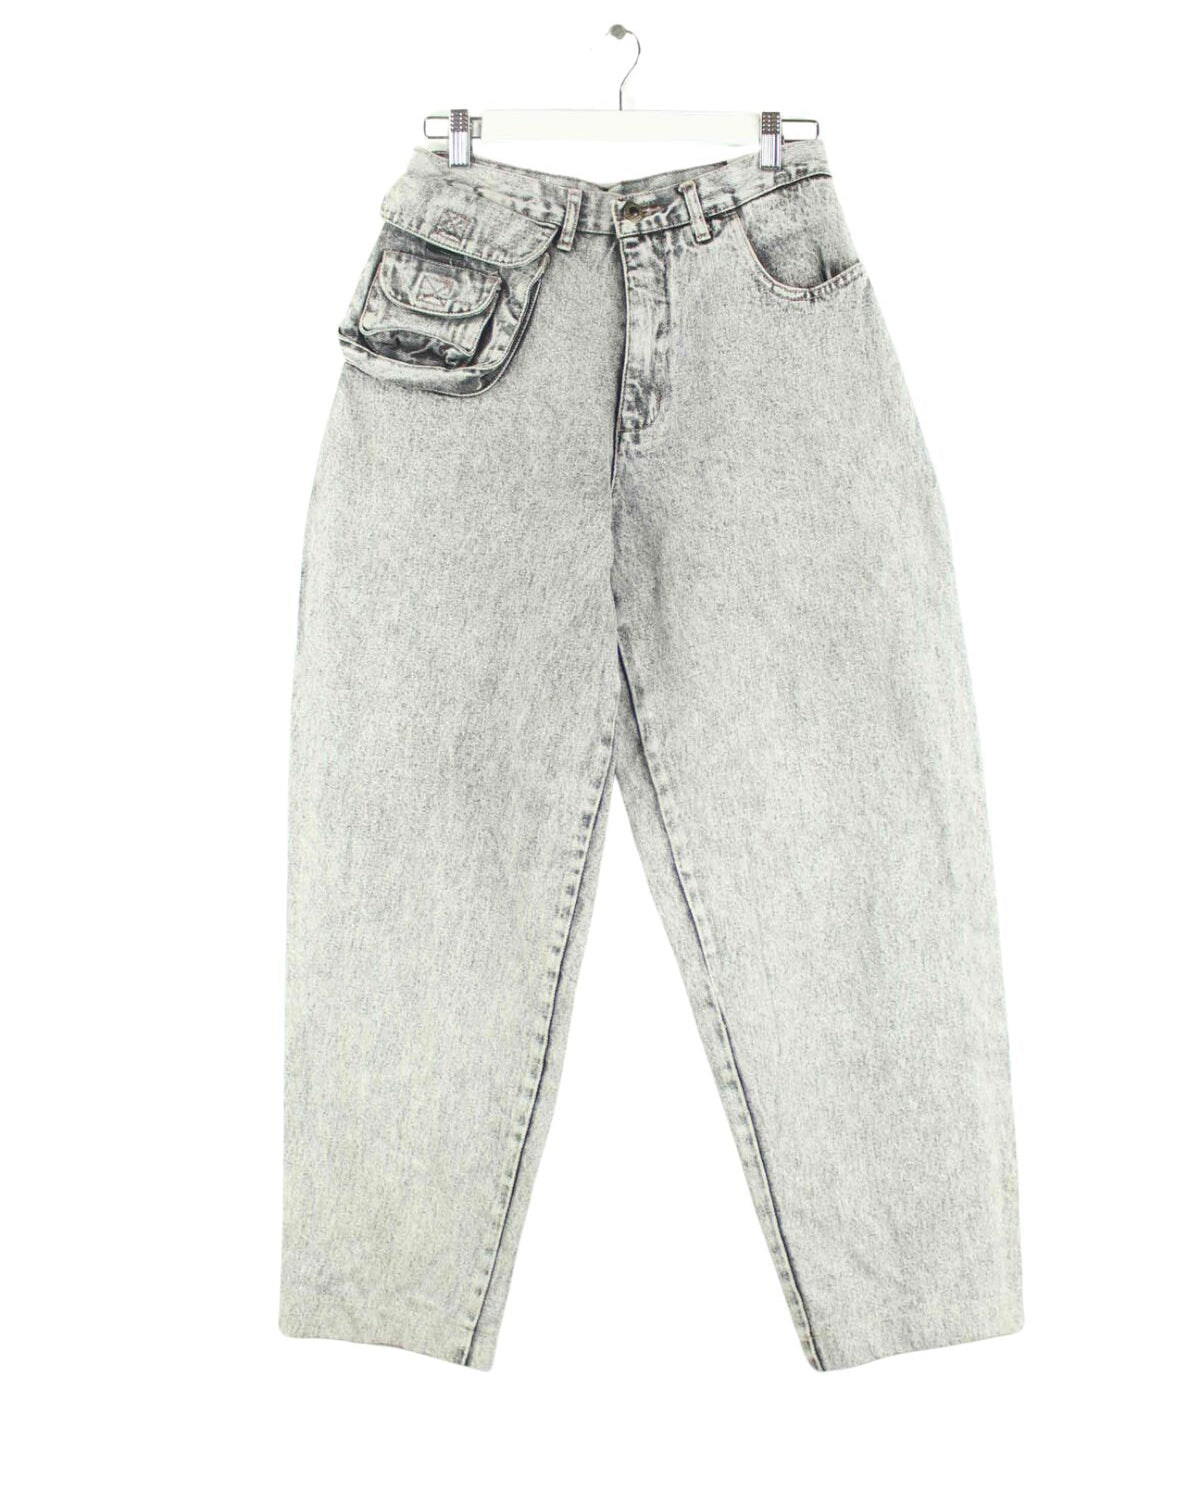 Vintage Damen 90s Washed Jeans Grau W28 L30 (front image)